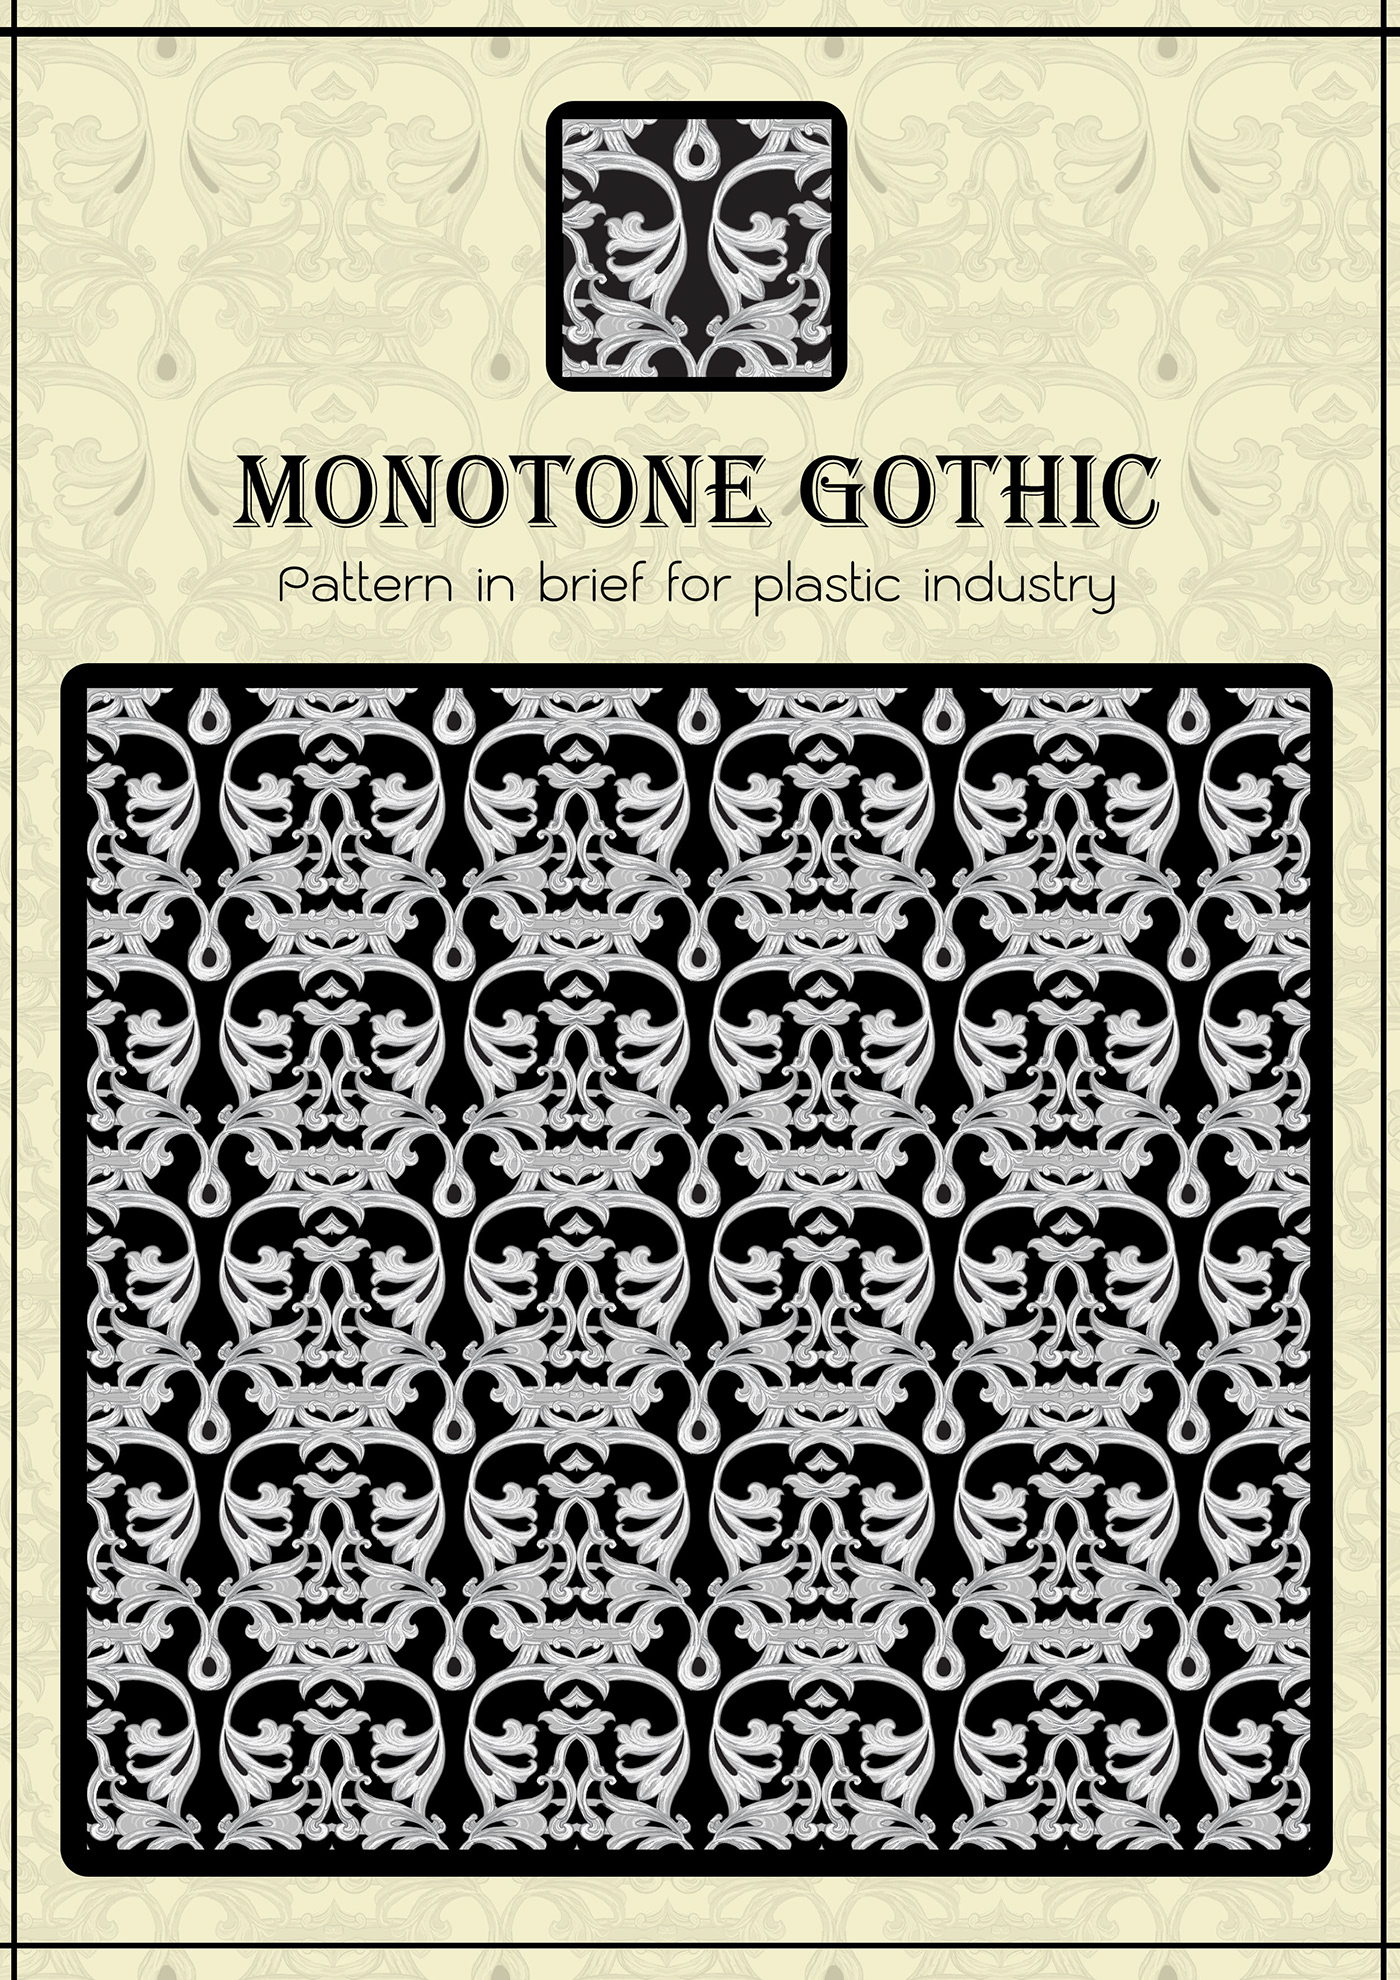 Style gothic history art pattern monotone White black baroque rococo